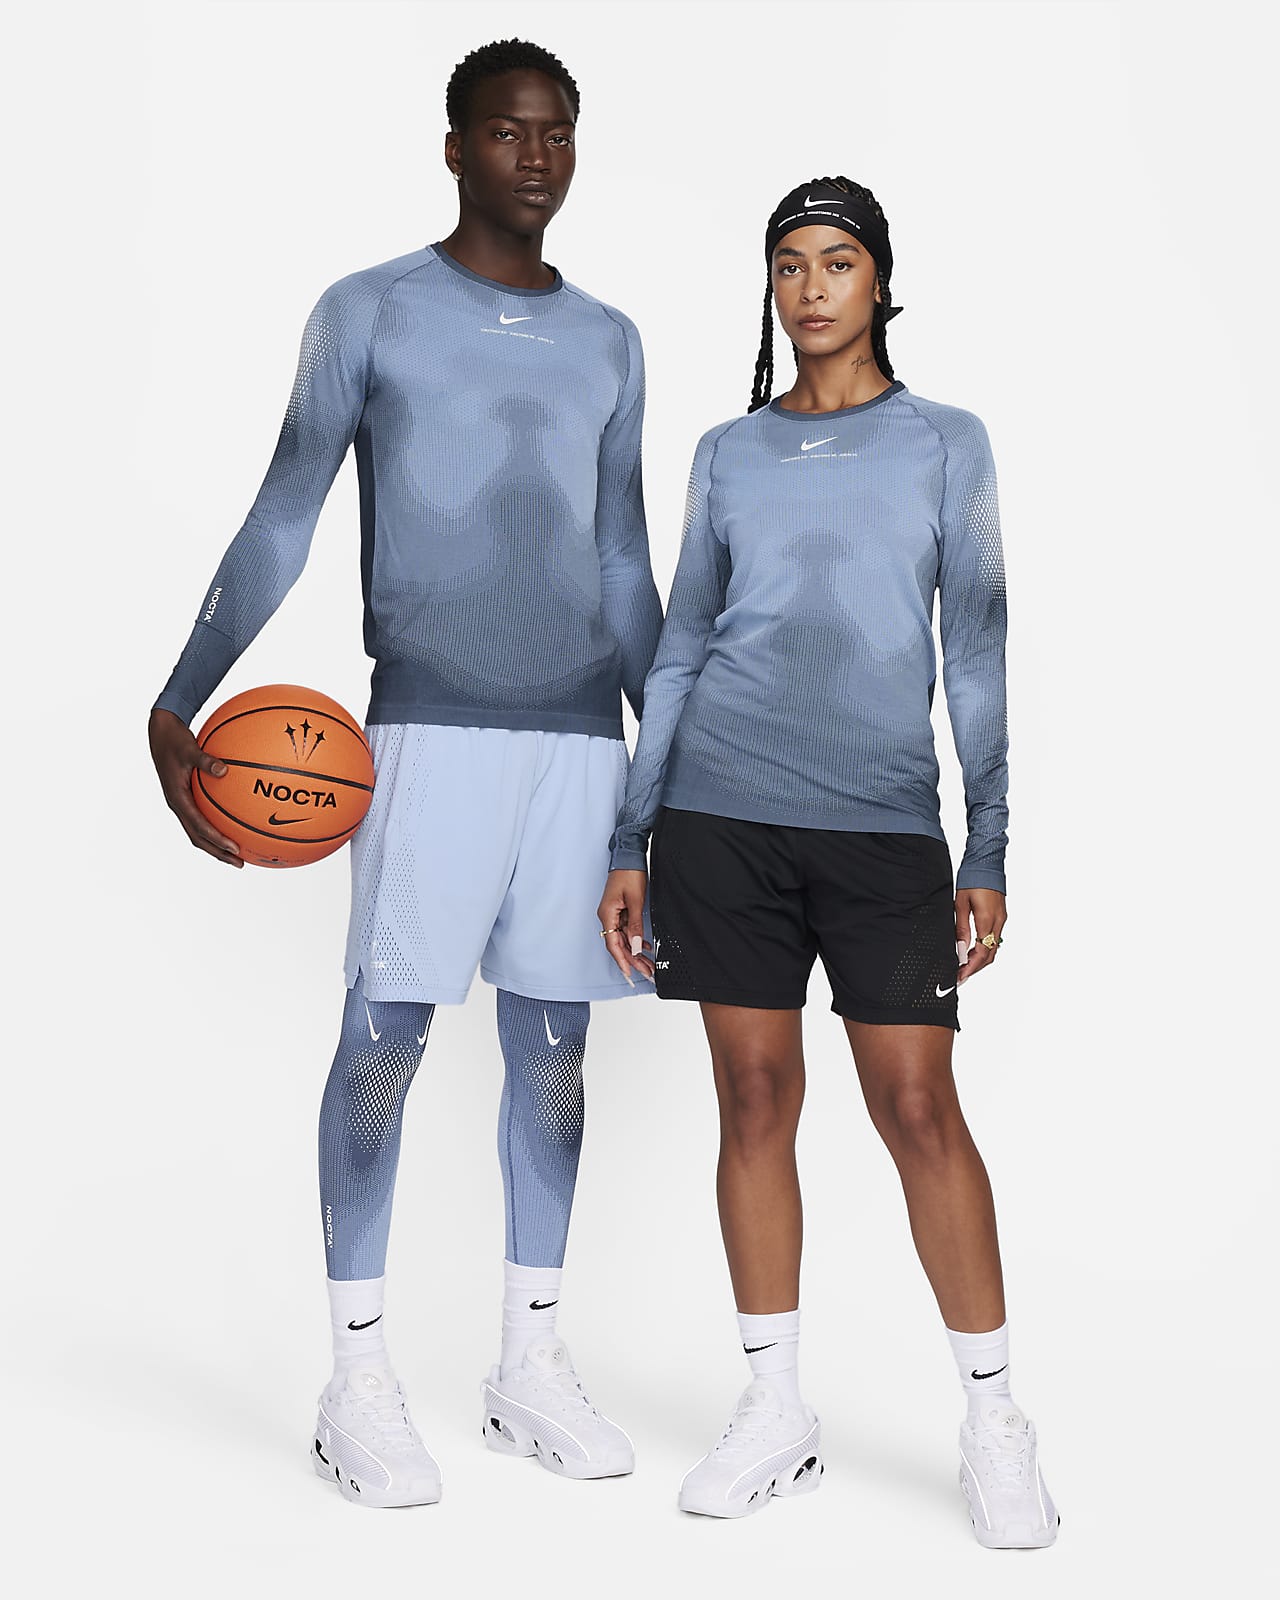 NOCTA Men's Dri-FIT Long-Sleeve Top. Nike BG